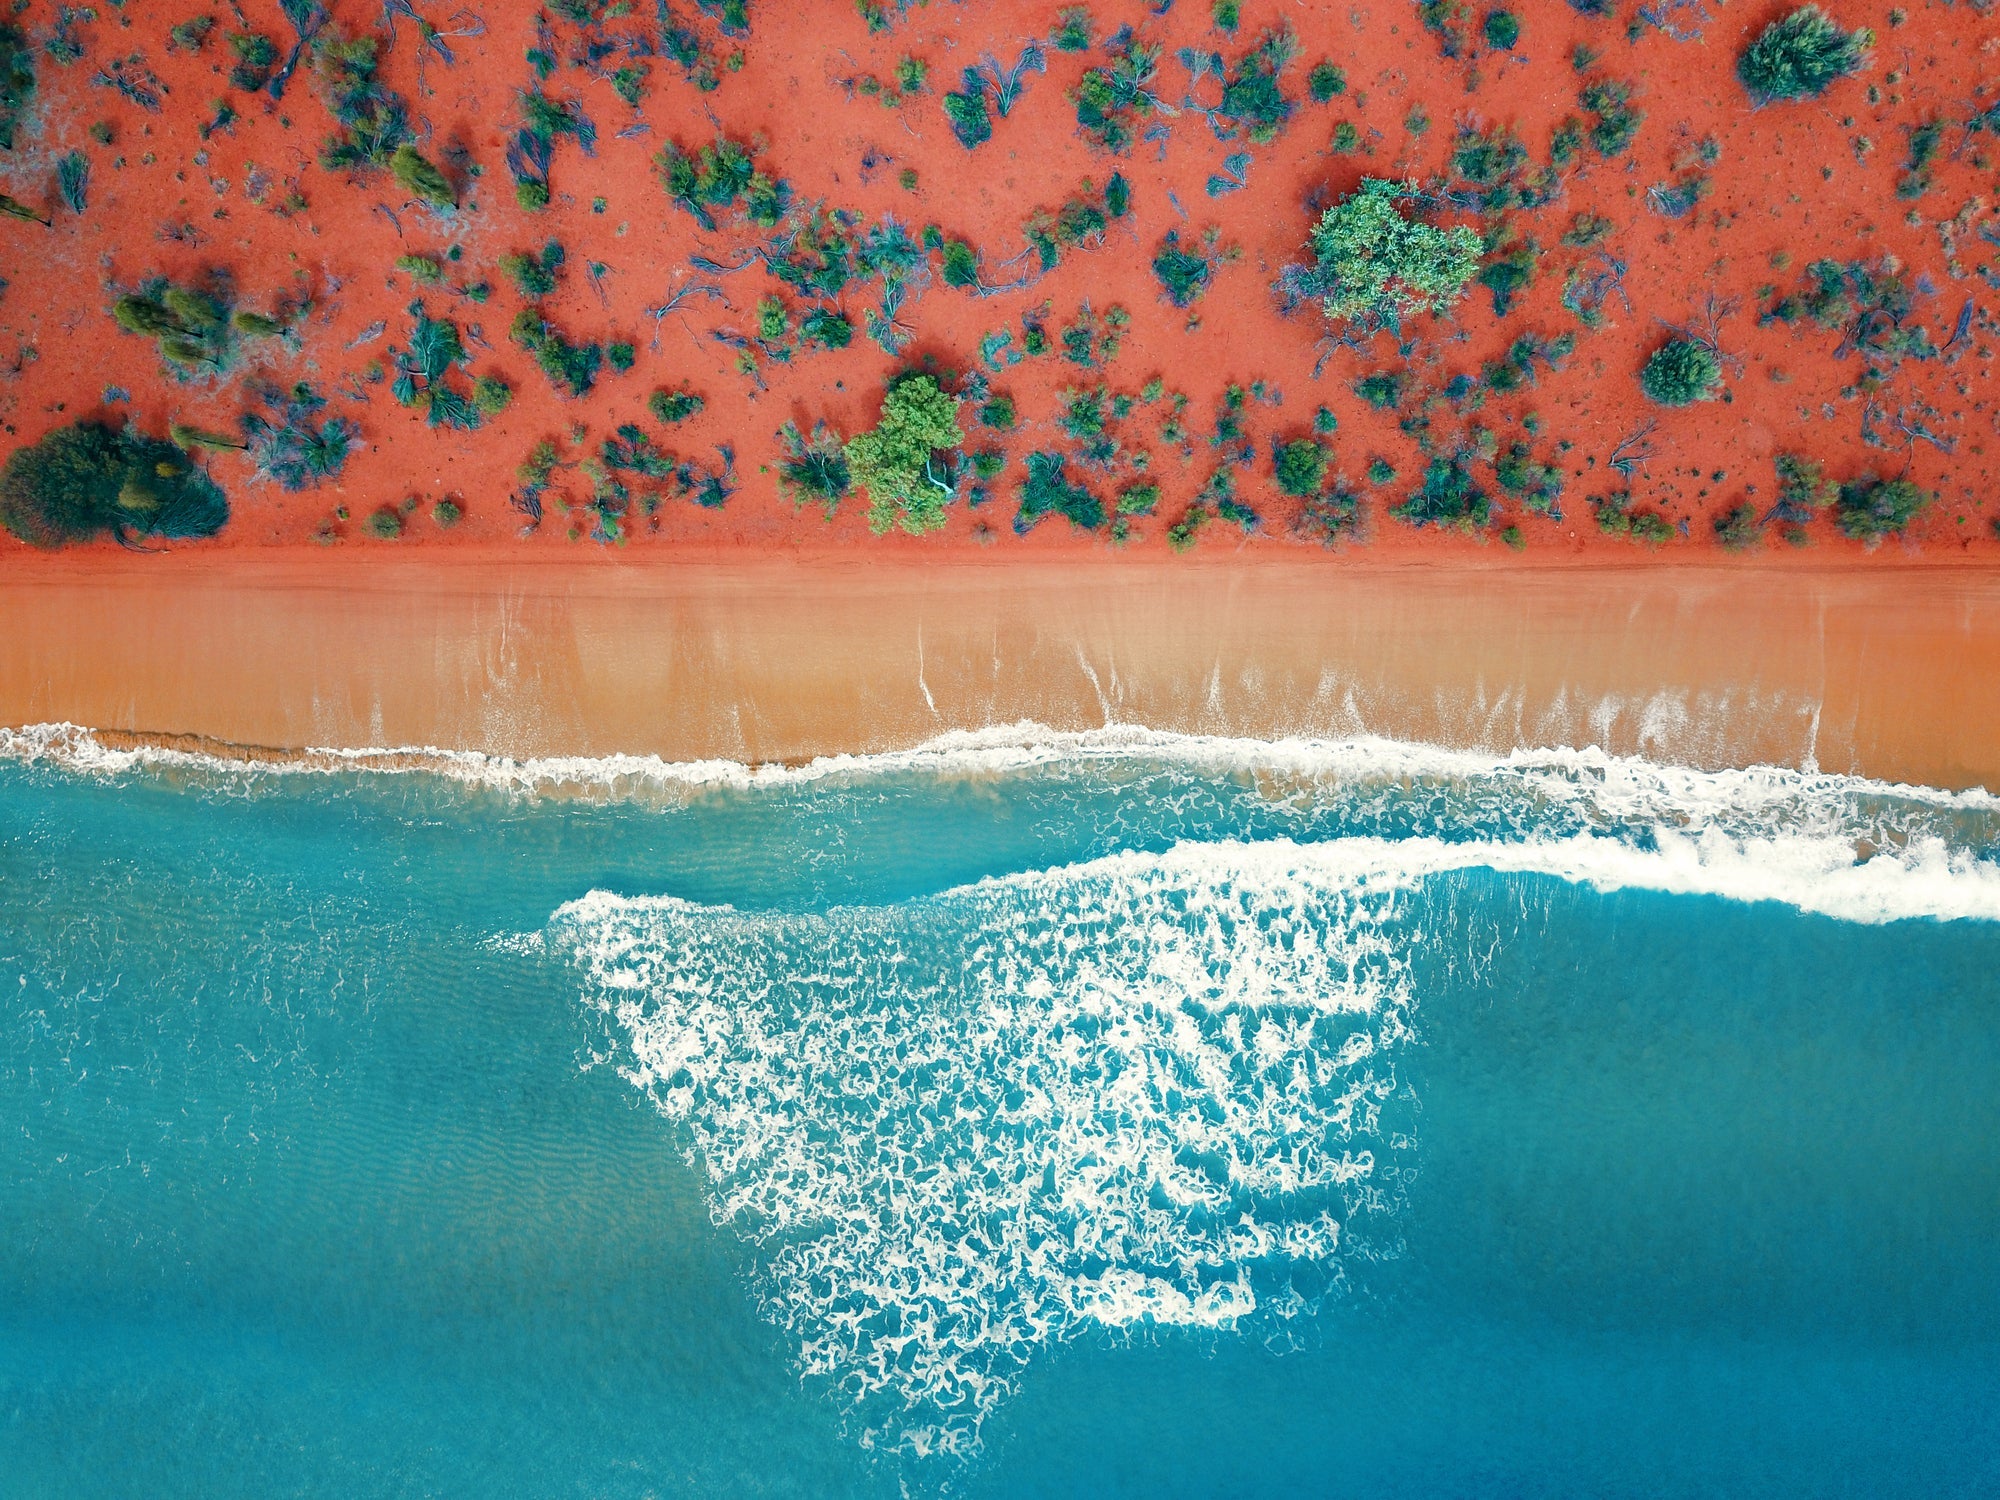 Aerial top view of a bright orange sandy beach in Western Australia